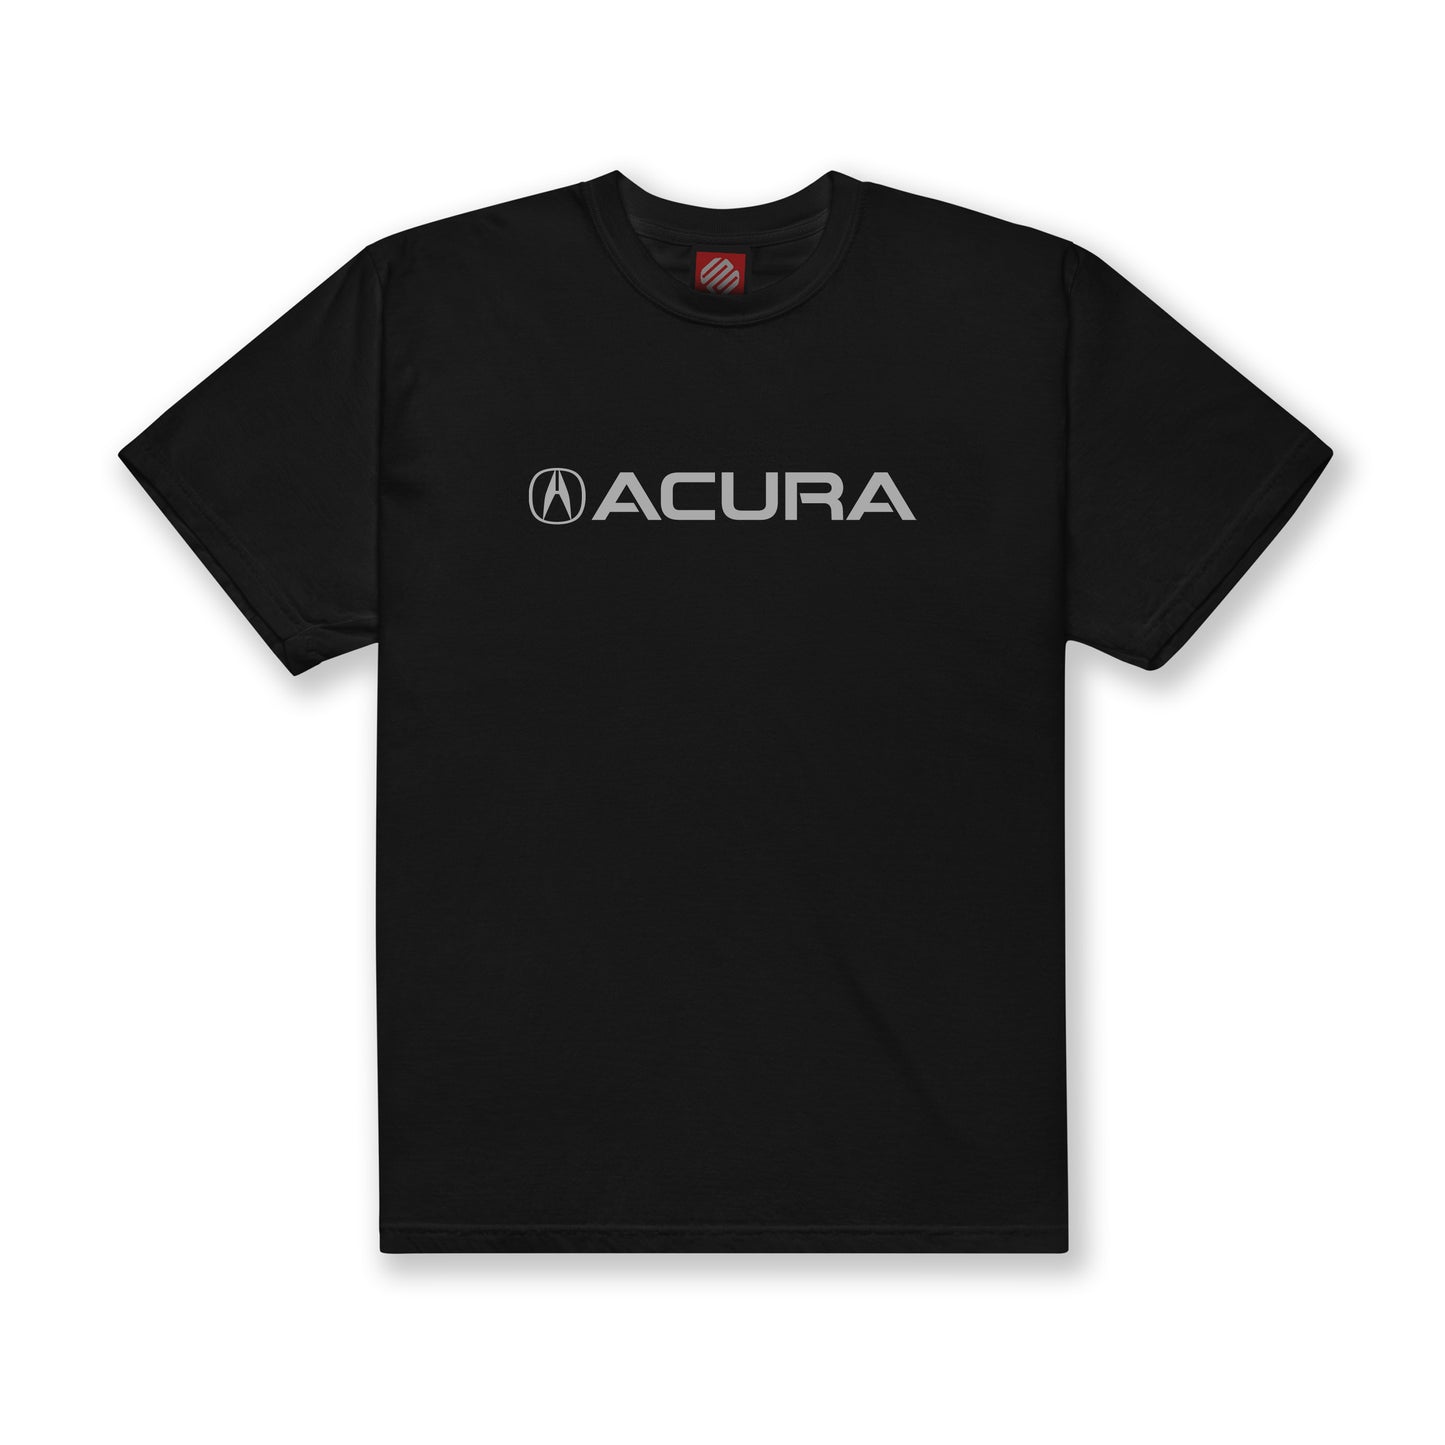 SGR x Acura Logo USDM + JDM - Black